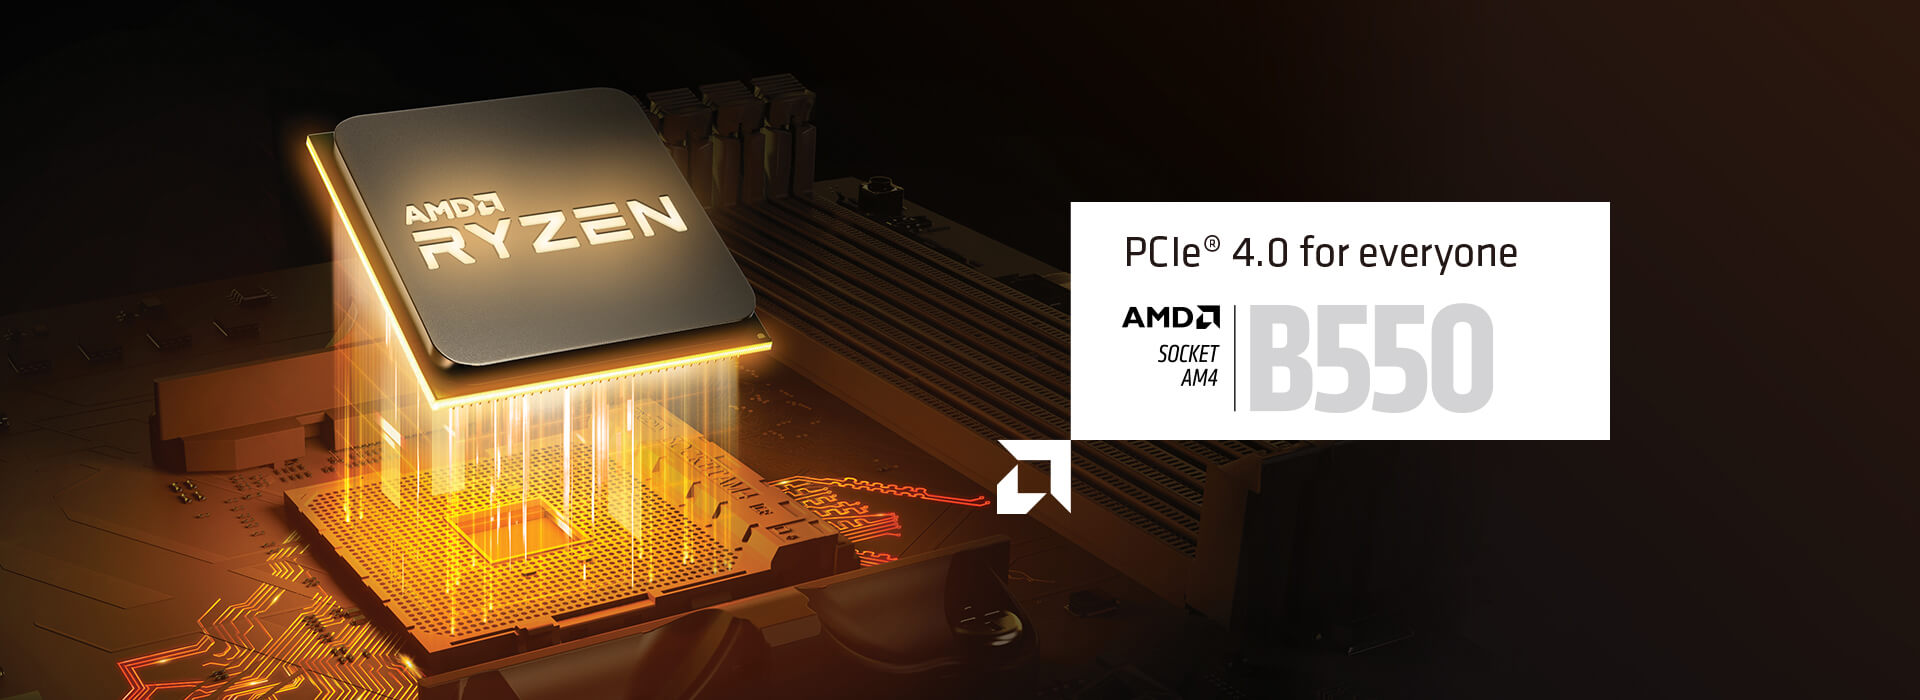 PCIe 4.0 לכולם. AMD SOCKET AM4 B550. דור 3 AMD AMD RYZEN מוכן. לא תואם ל- AMD Ryzen 5 3400G ו- AMD Ryzen 3 3200G.